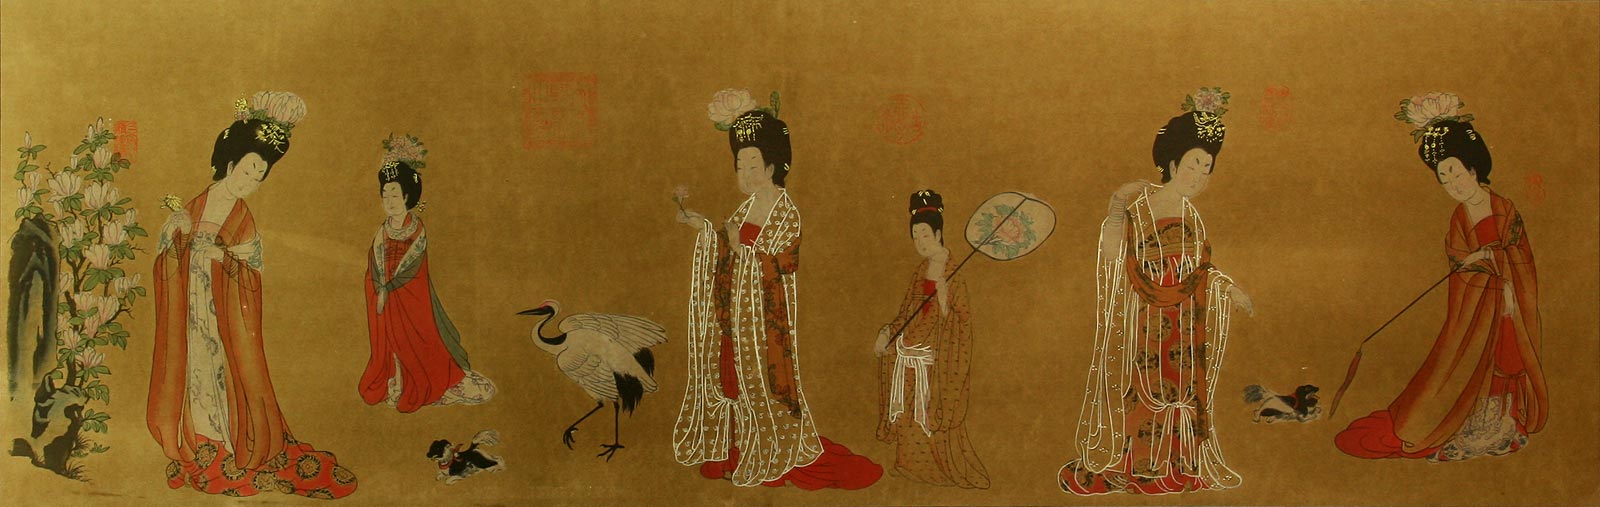 Tang Dynasty Ladies - Partial Print Painting